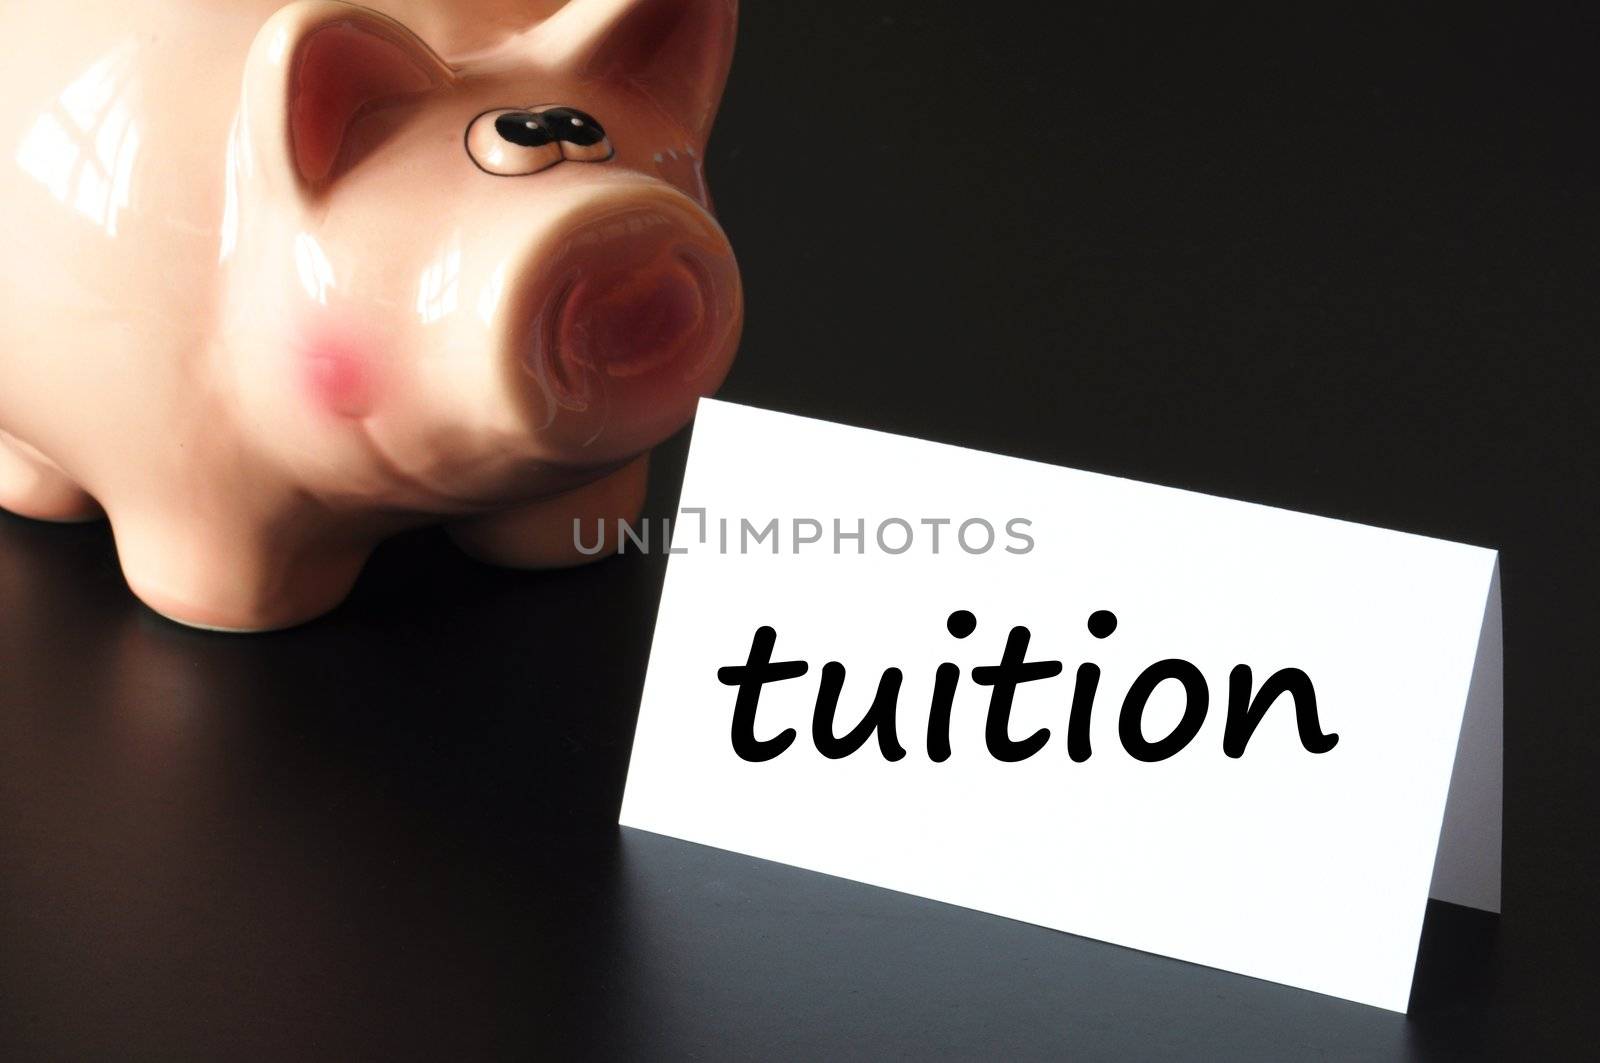 education tuition by gunnar3000